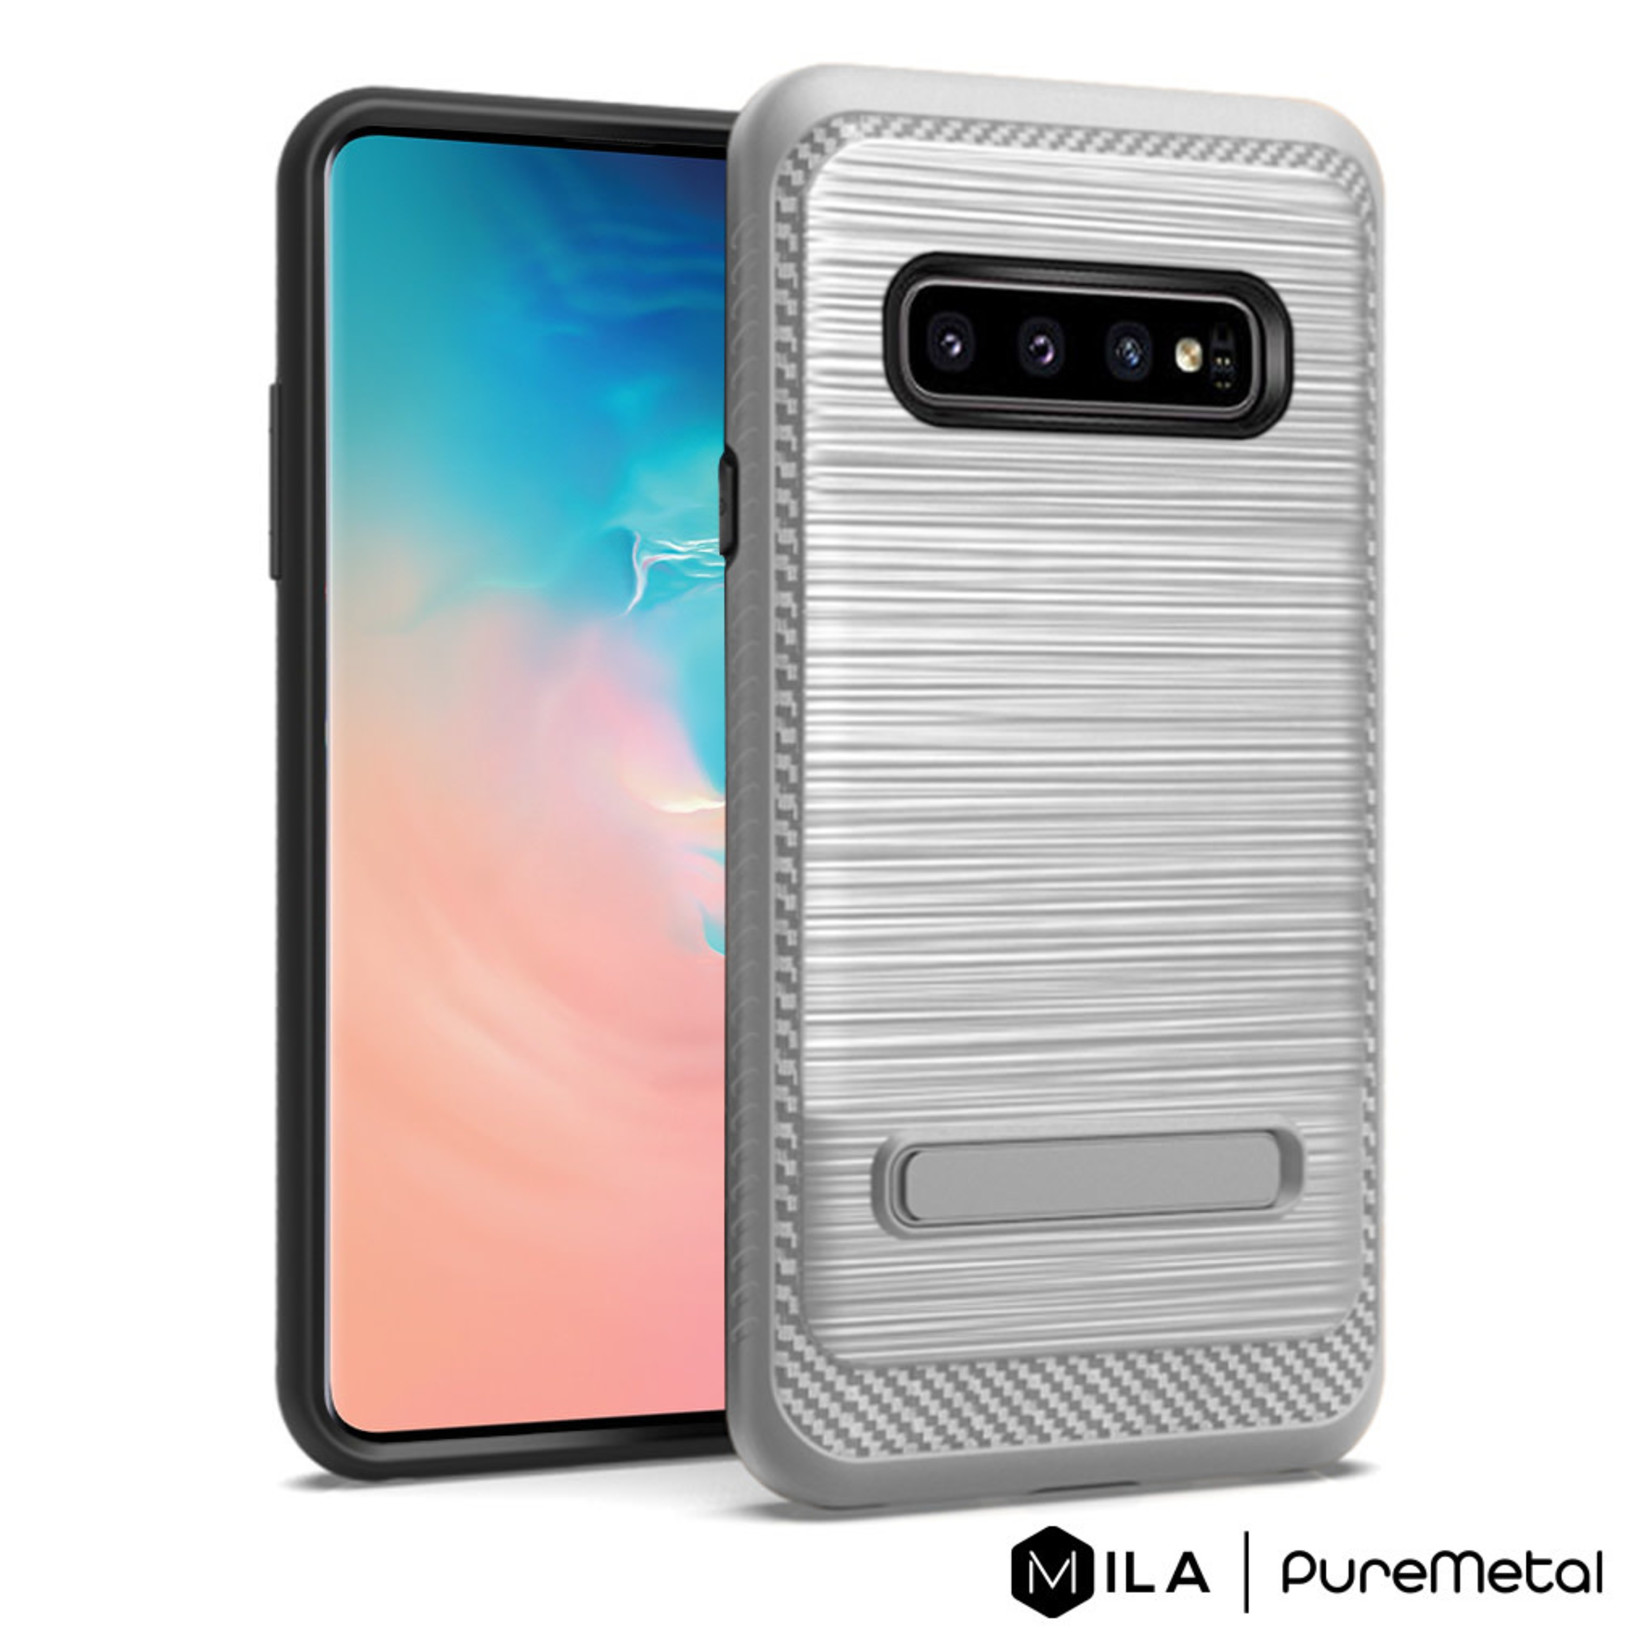 MILA | PureMetal Case for Galaxy S10 Plus